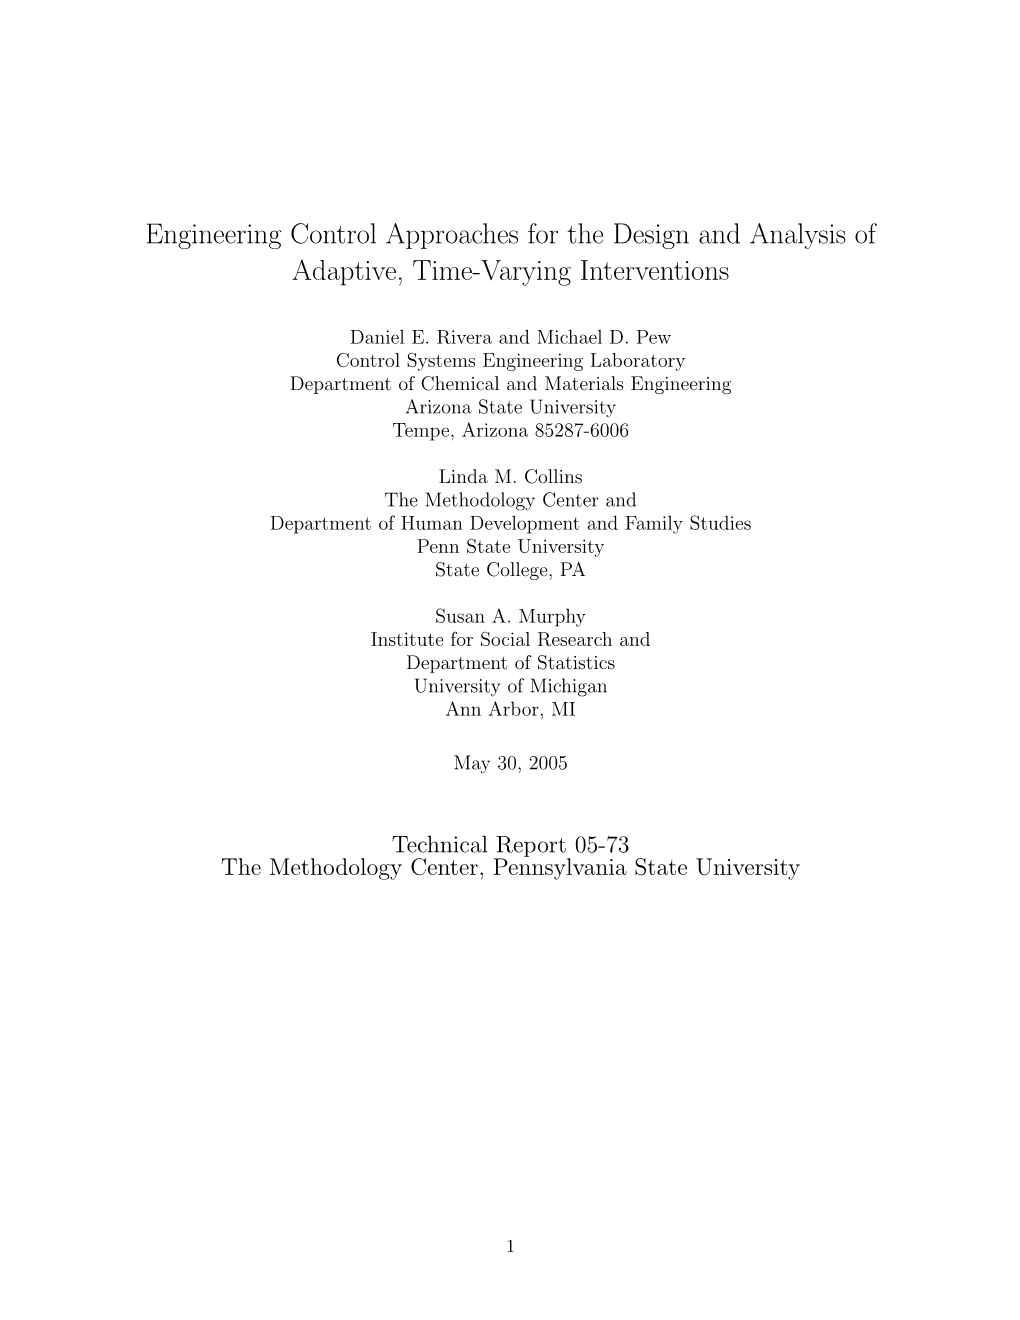 Technical Report 05-73 the Methodology Center, Pennsylvania State University